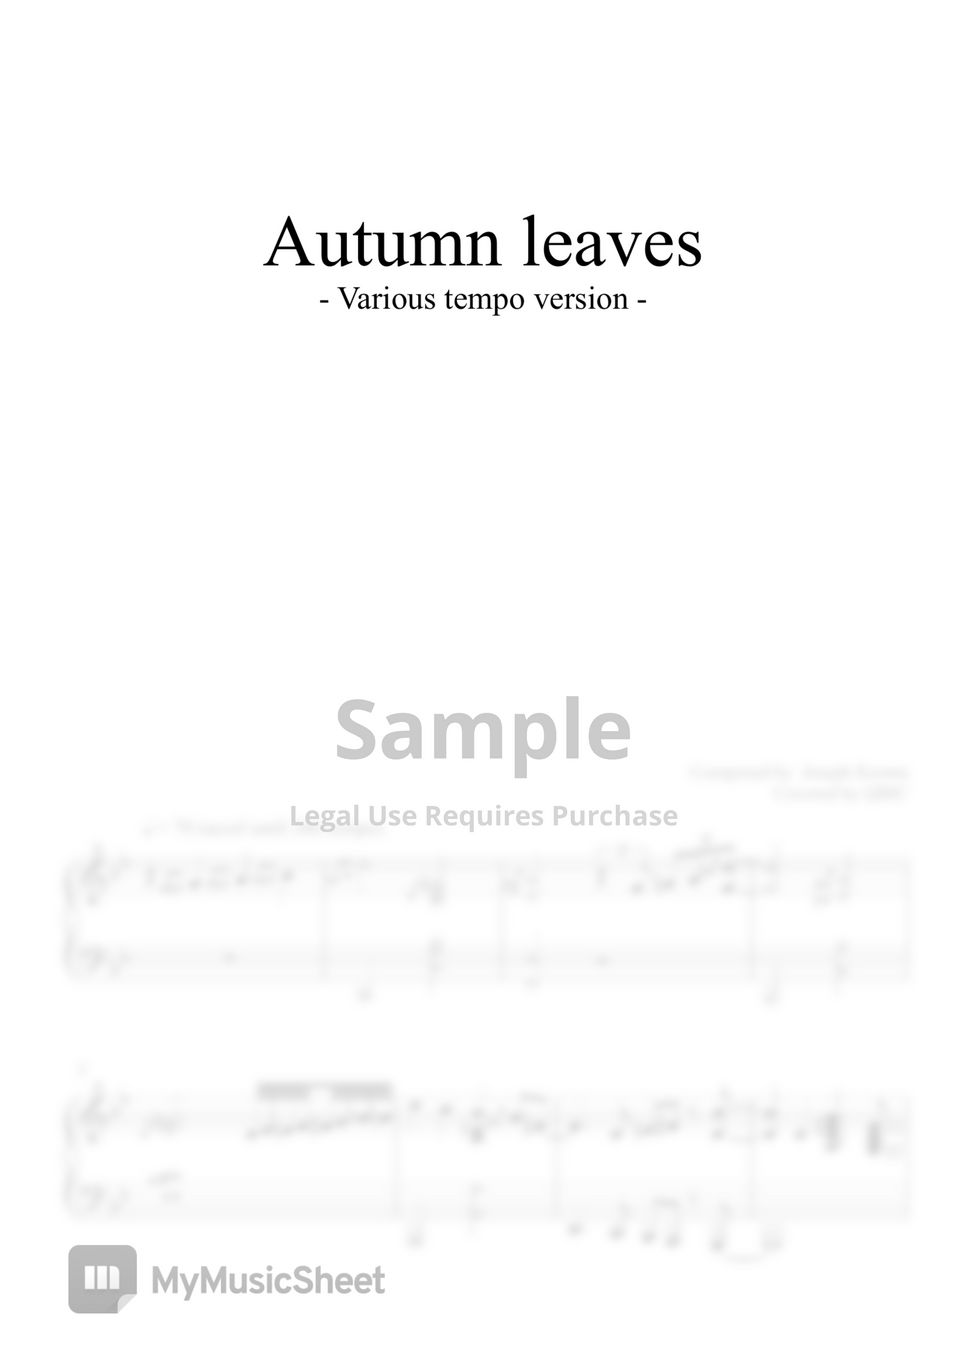 Joseph Kosma - Autumn leaves (various tempo) by QBIC